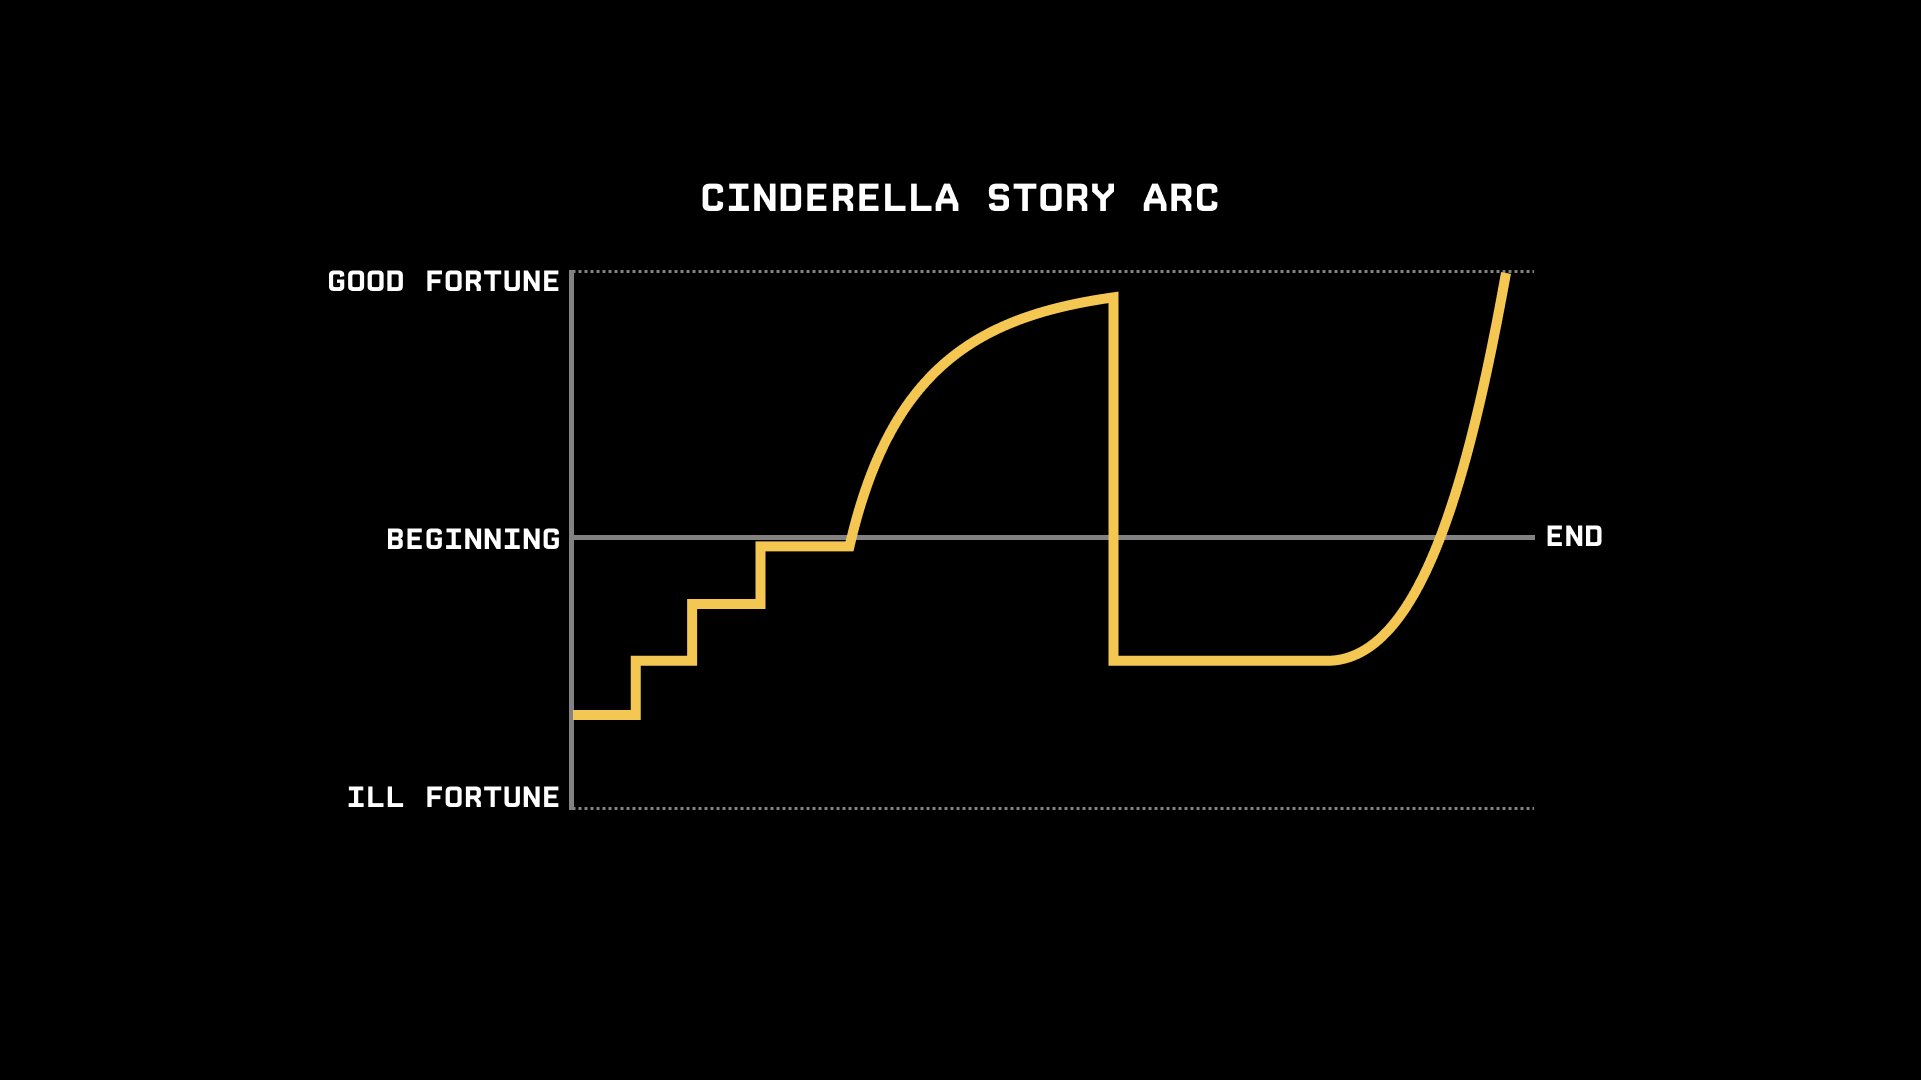 Cinderella story arc